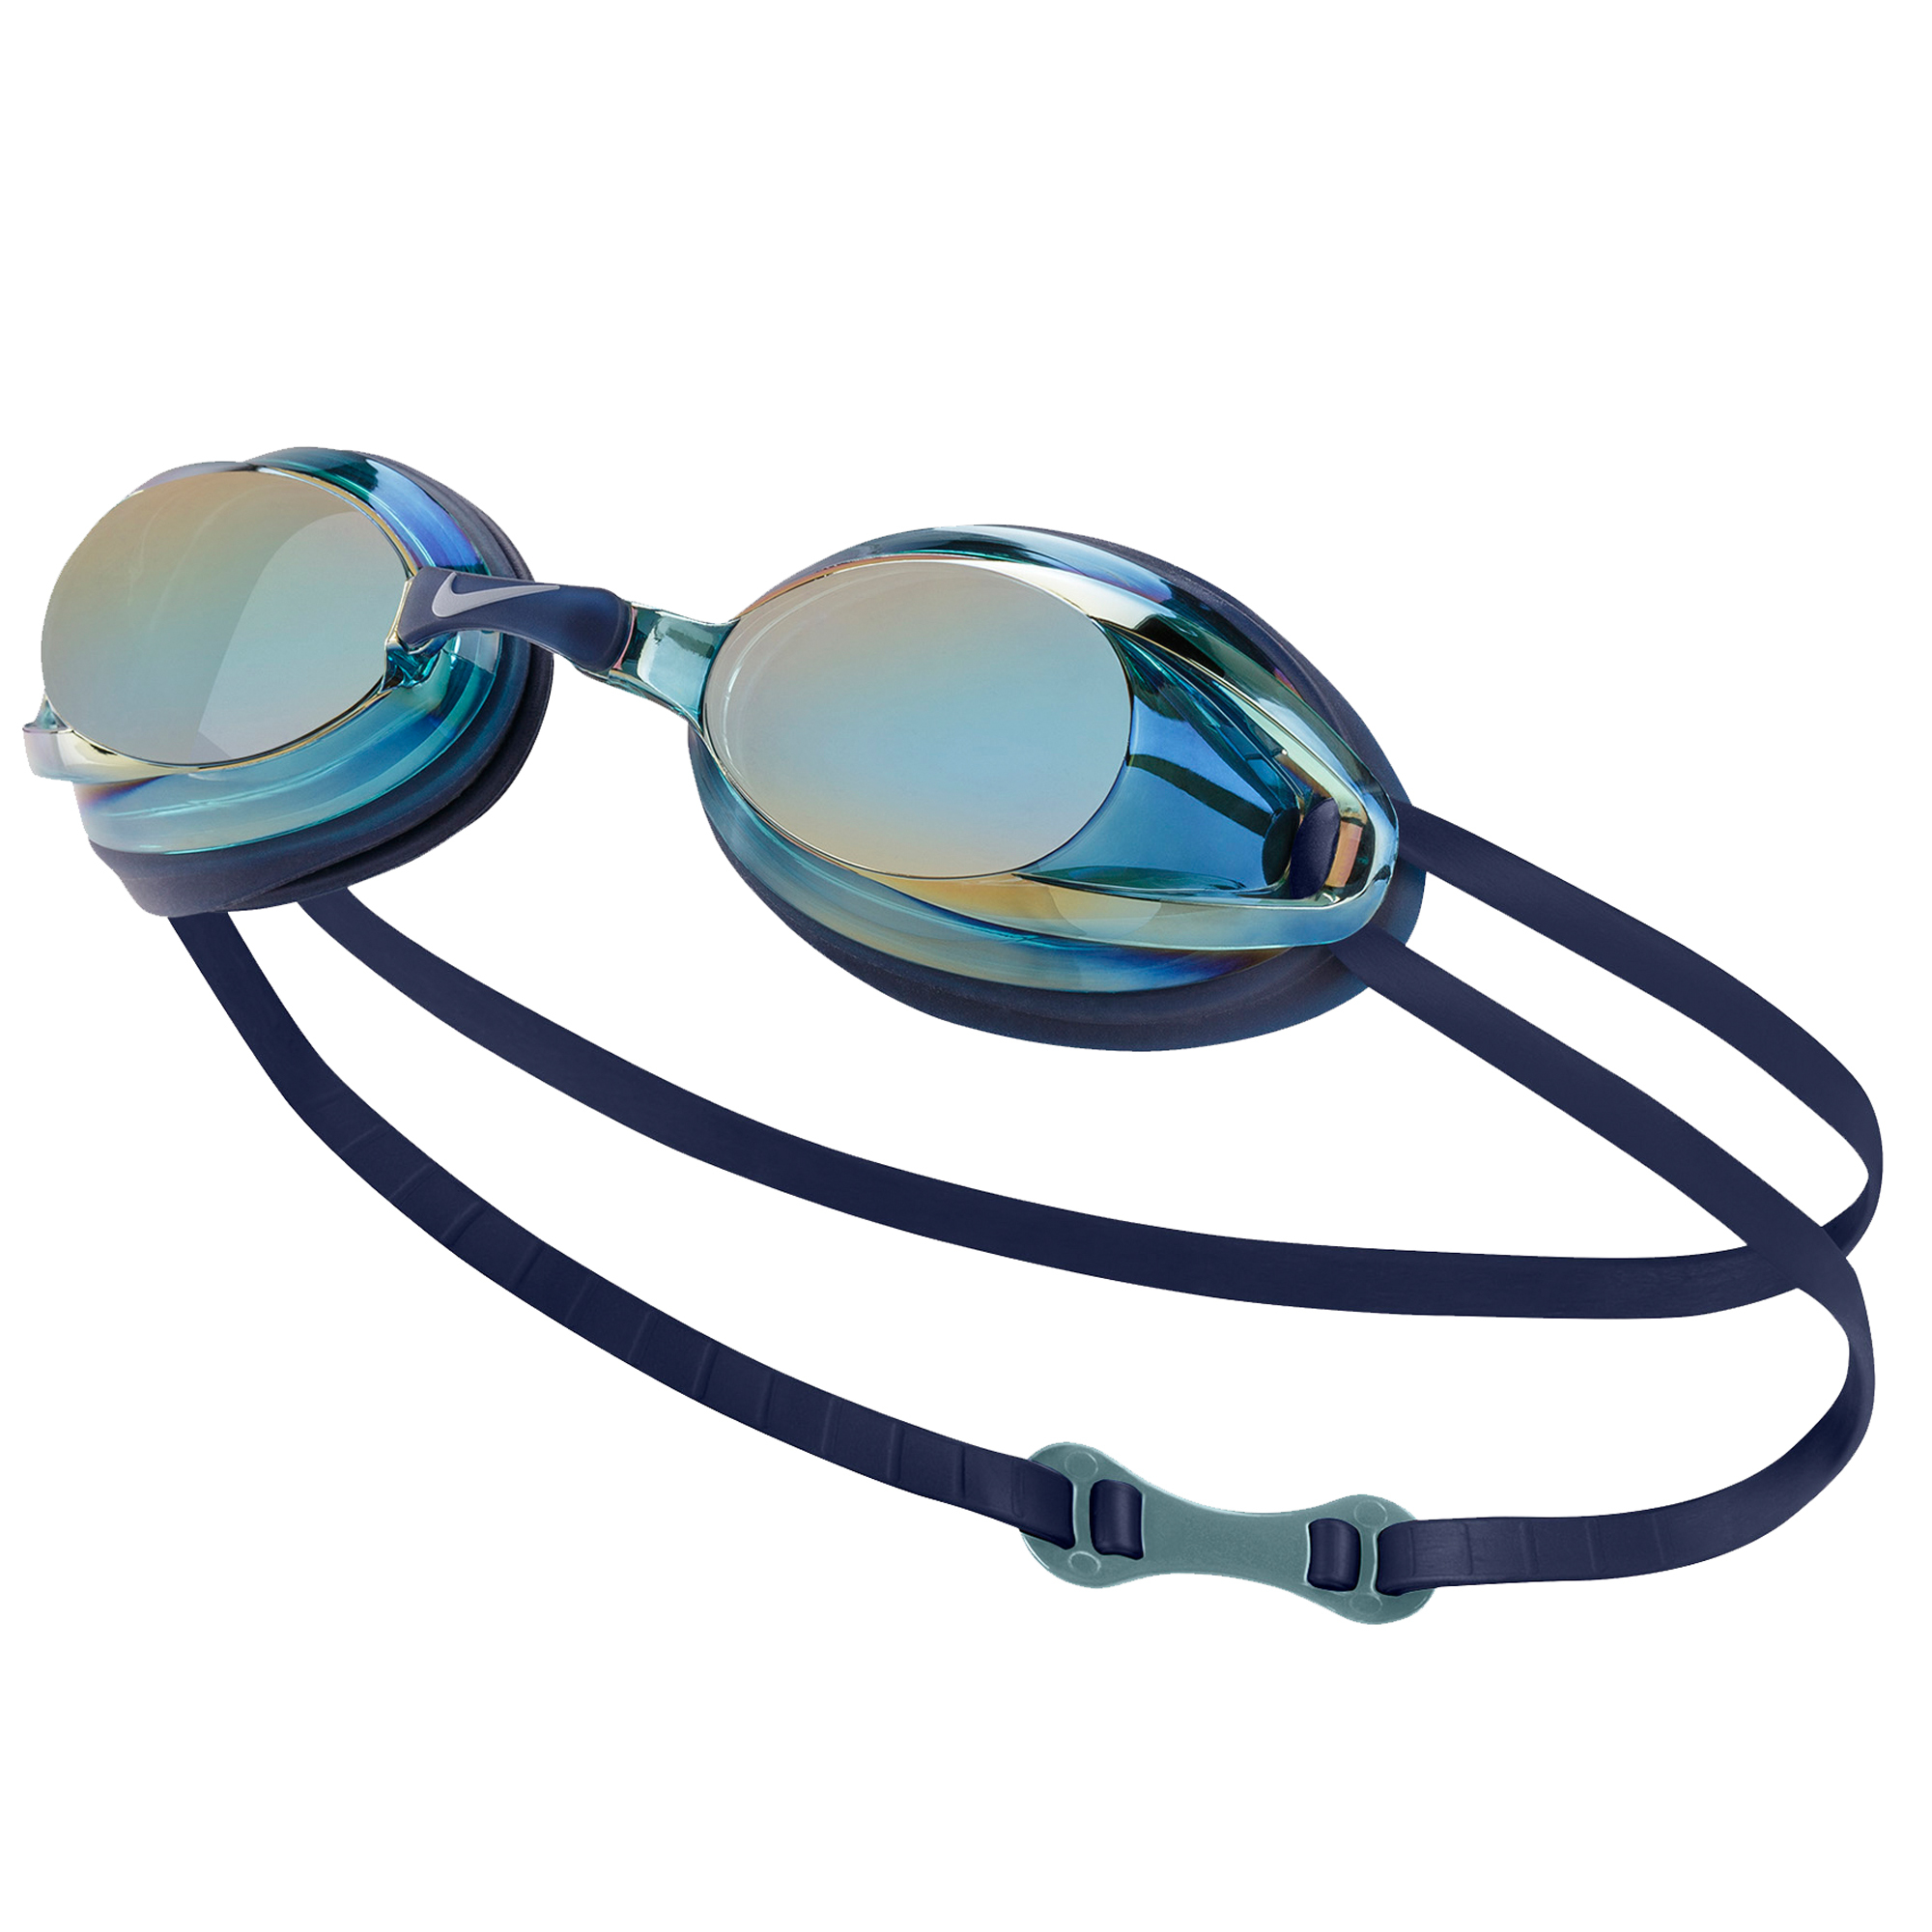 Nike Swim Remora Competition Mirror Goggle - Midnight Blue/Navy